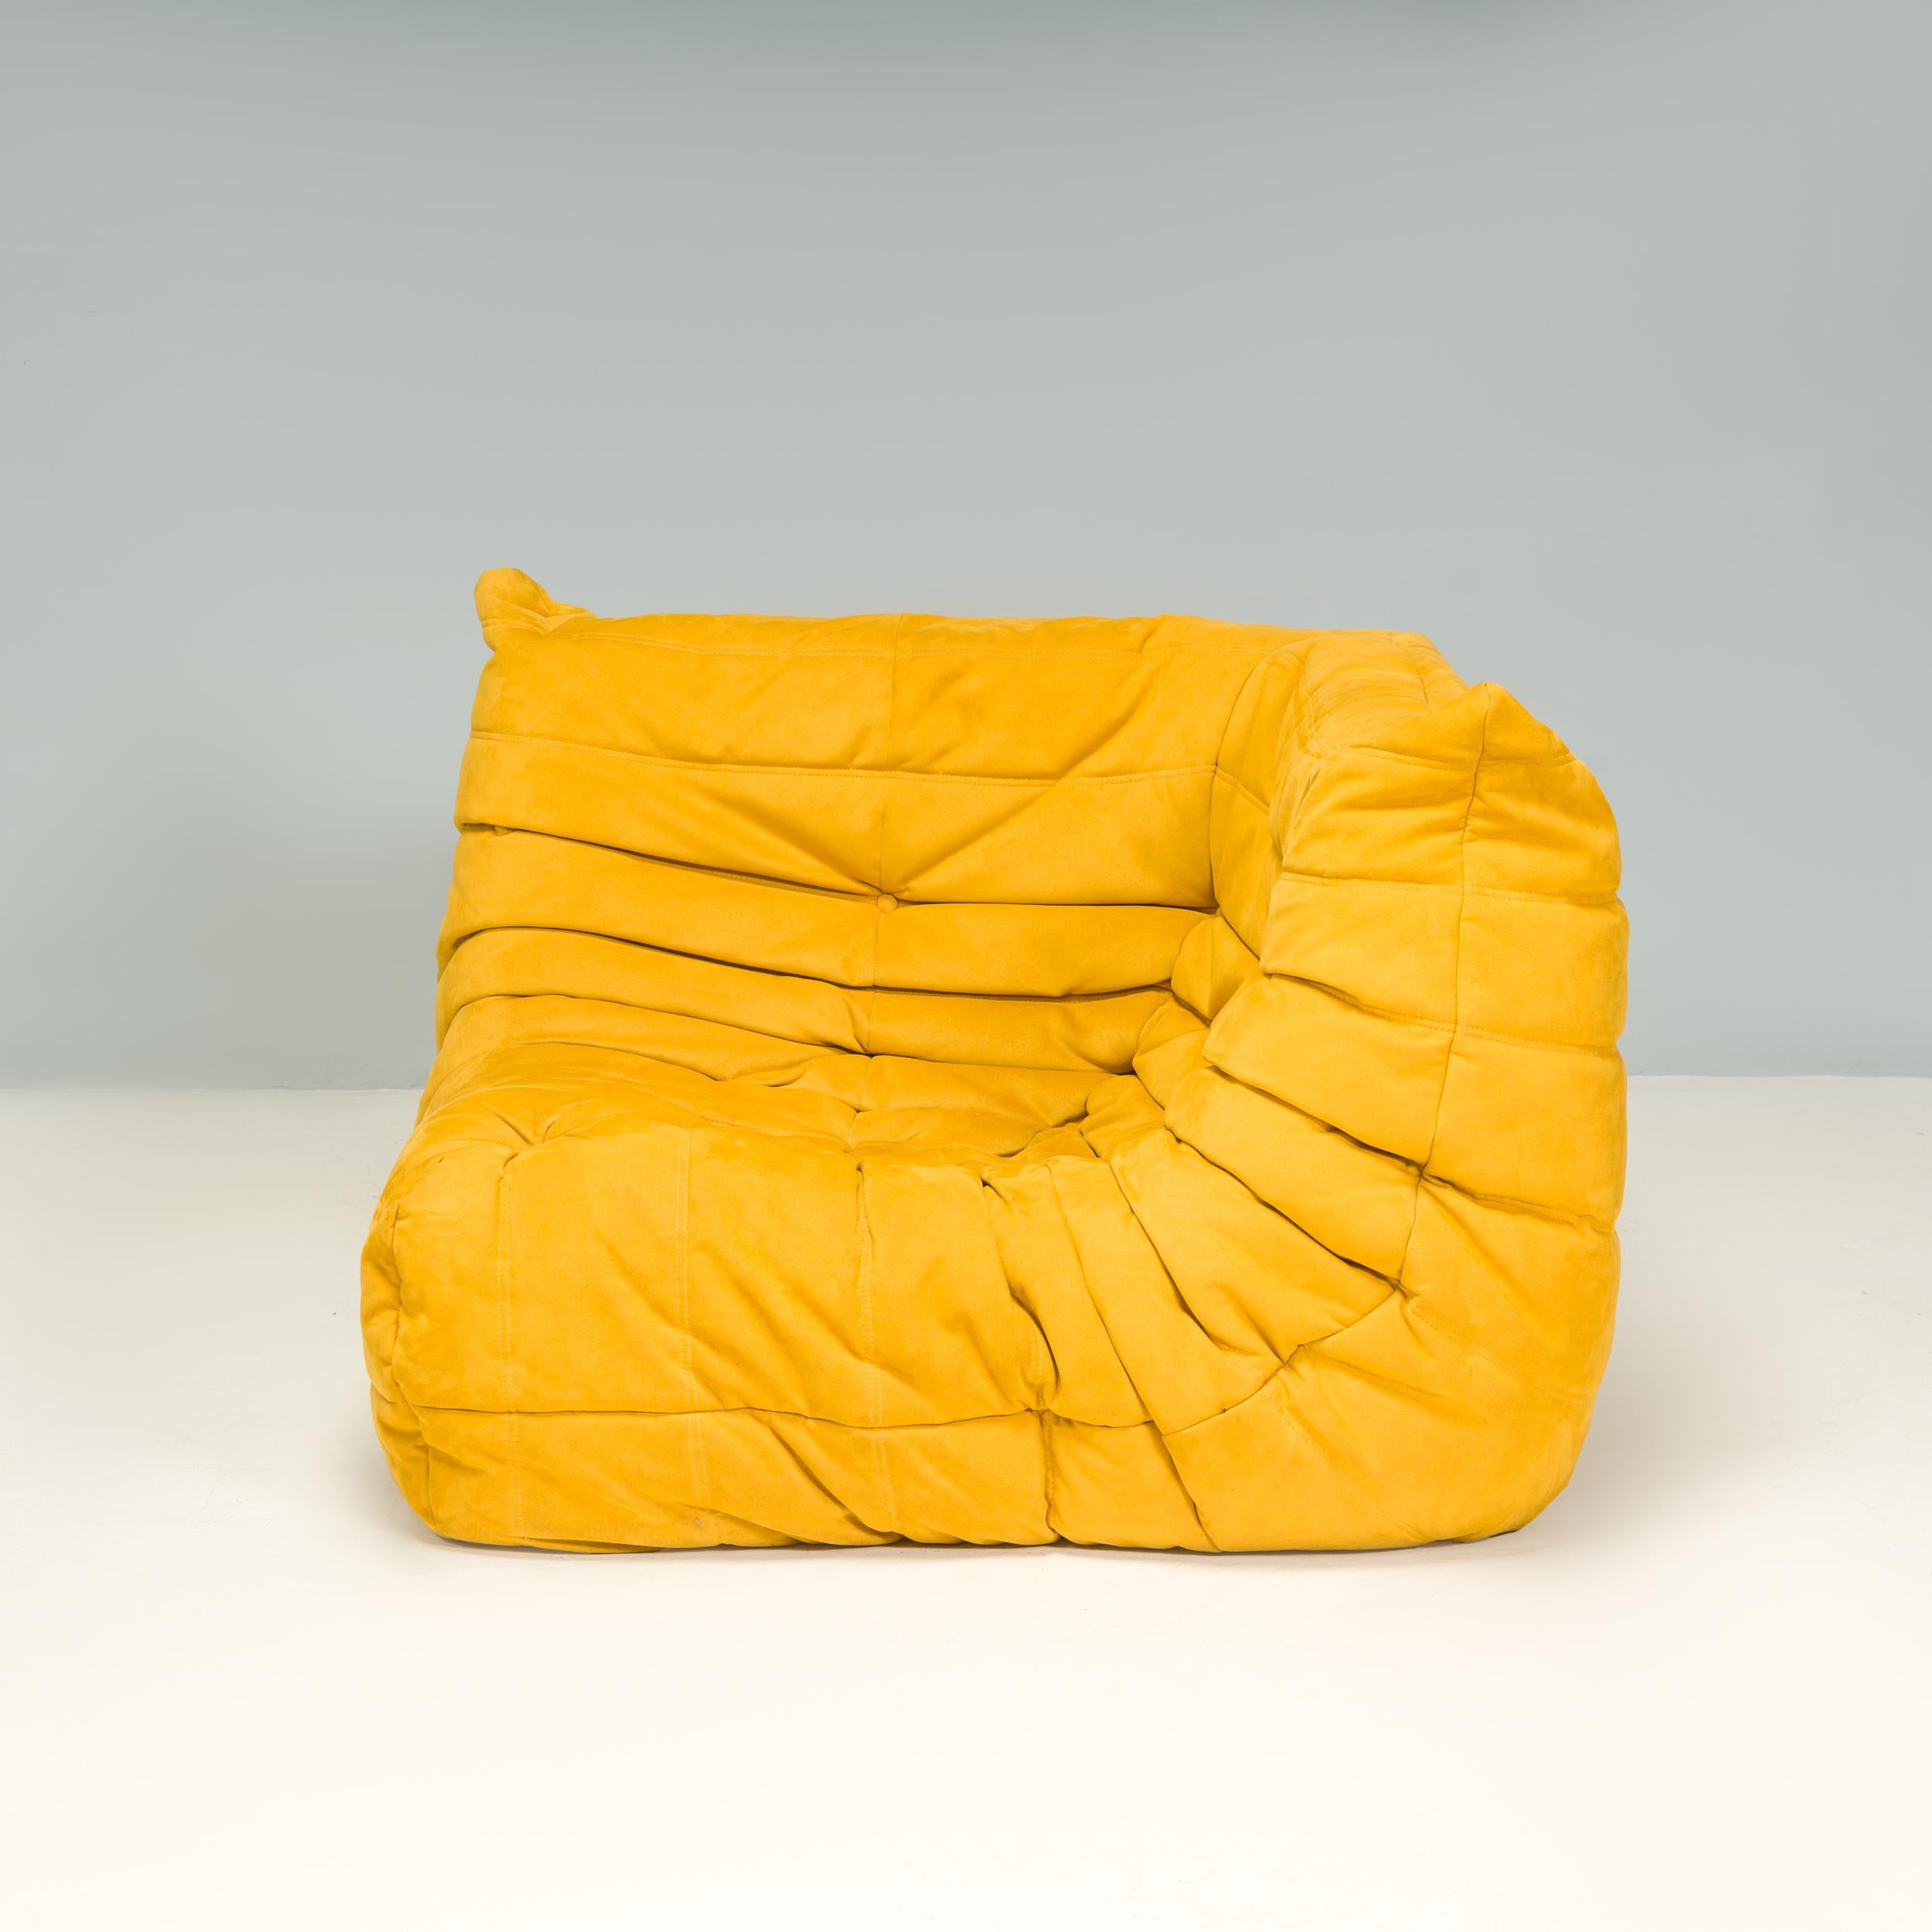  Ligne Roset by Michel Ducaroy Togo Yellow Alcantara Modular Sofas, Set of 5 3